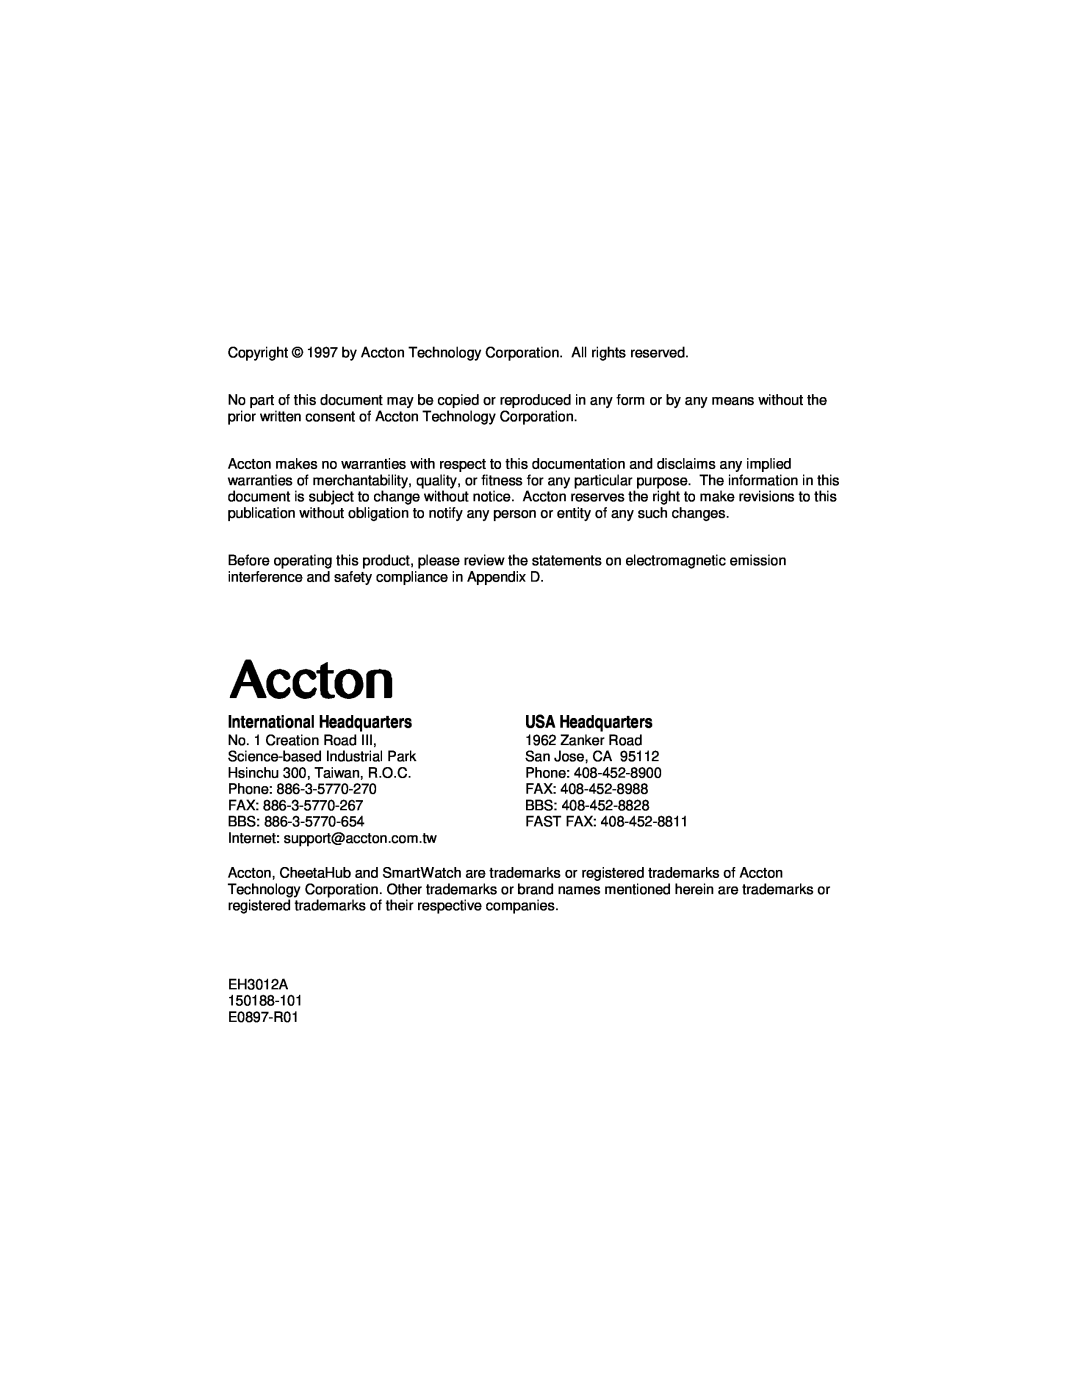 Accton Technology POWER-3012A manual International Headquarters, USA Headquarters, Fast Fax 